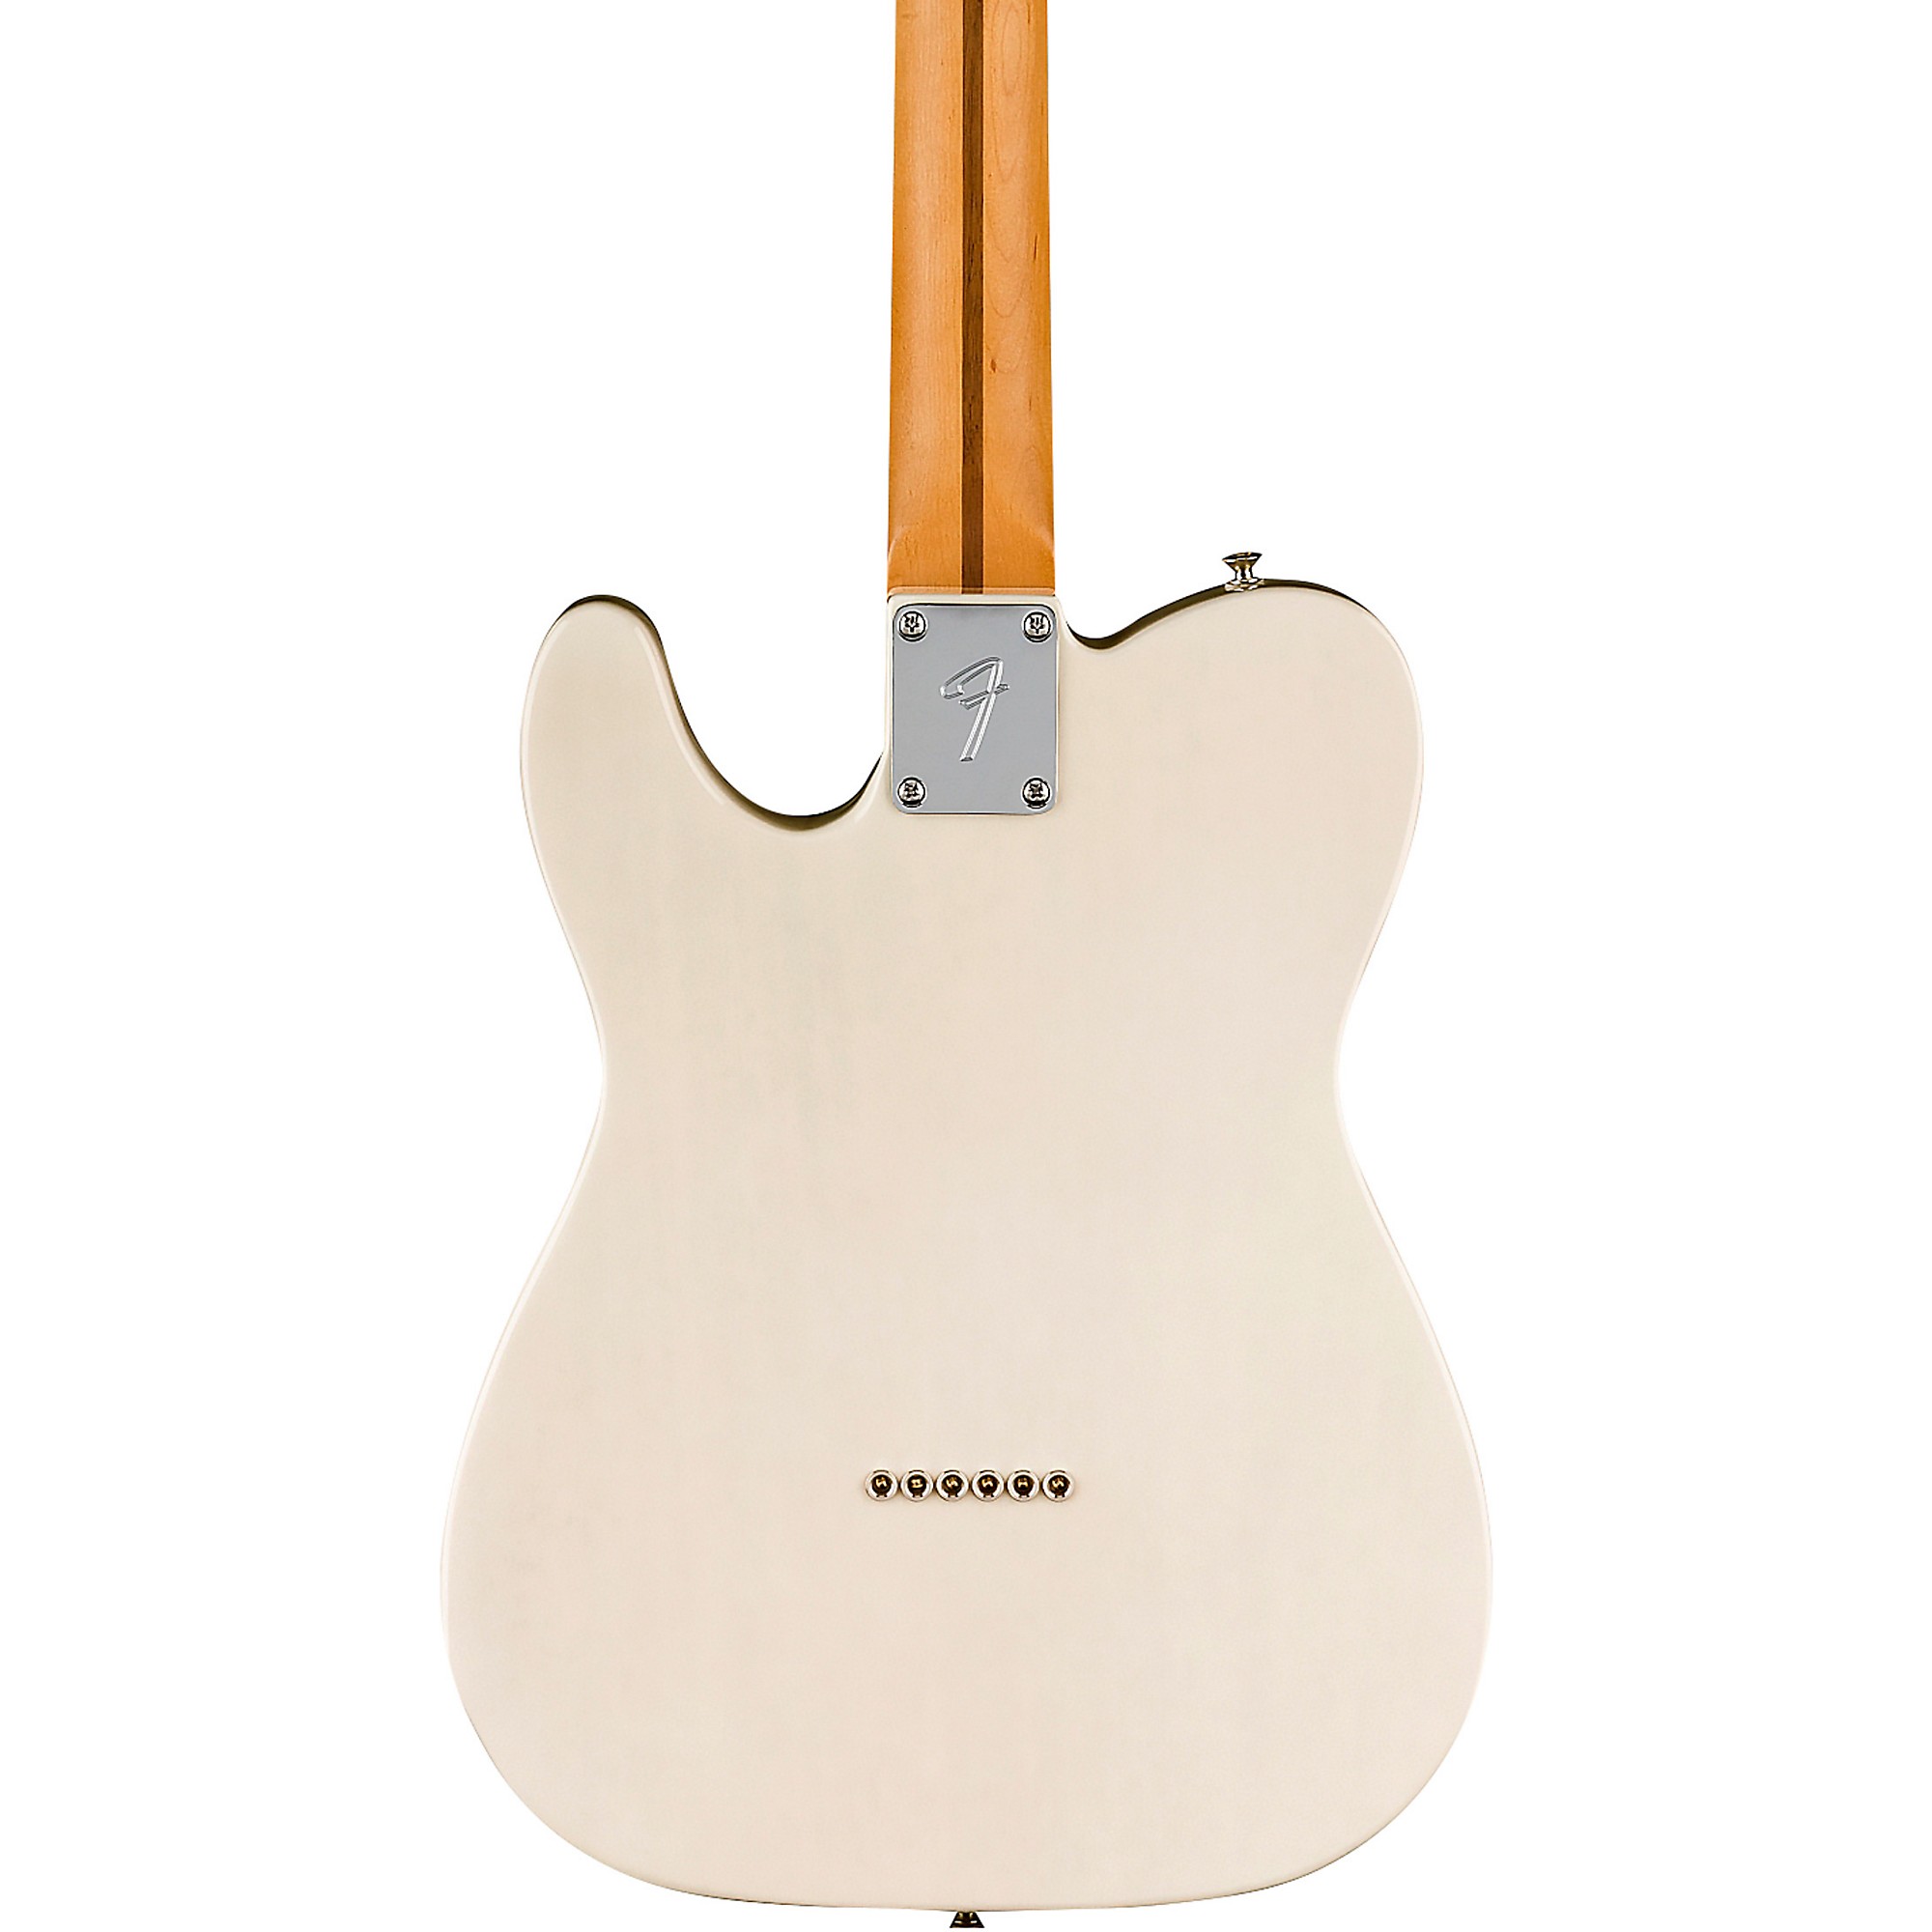 Электрогитара Fender Gold Foil Telecaster, белая блондинка